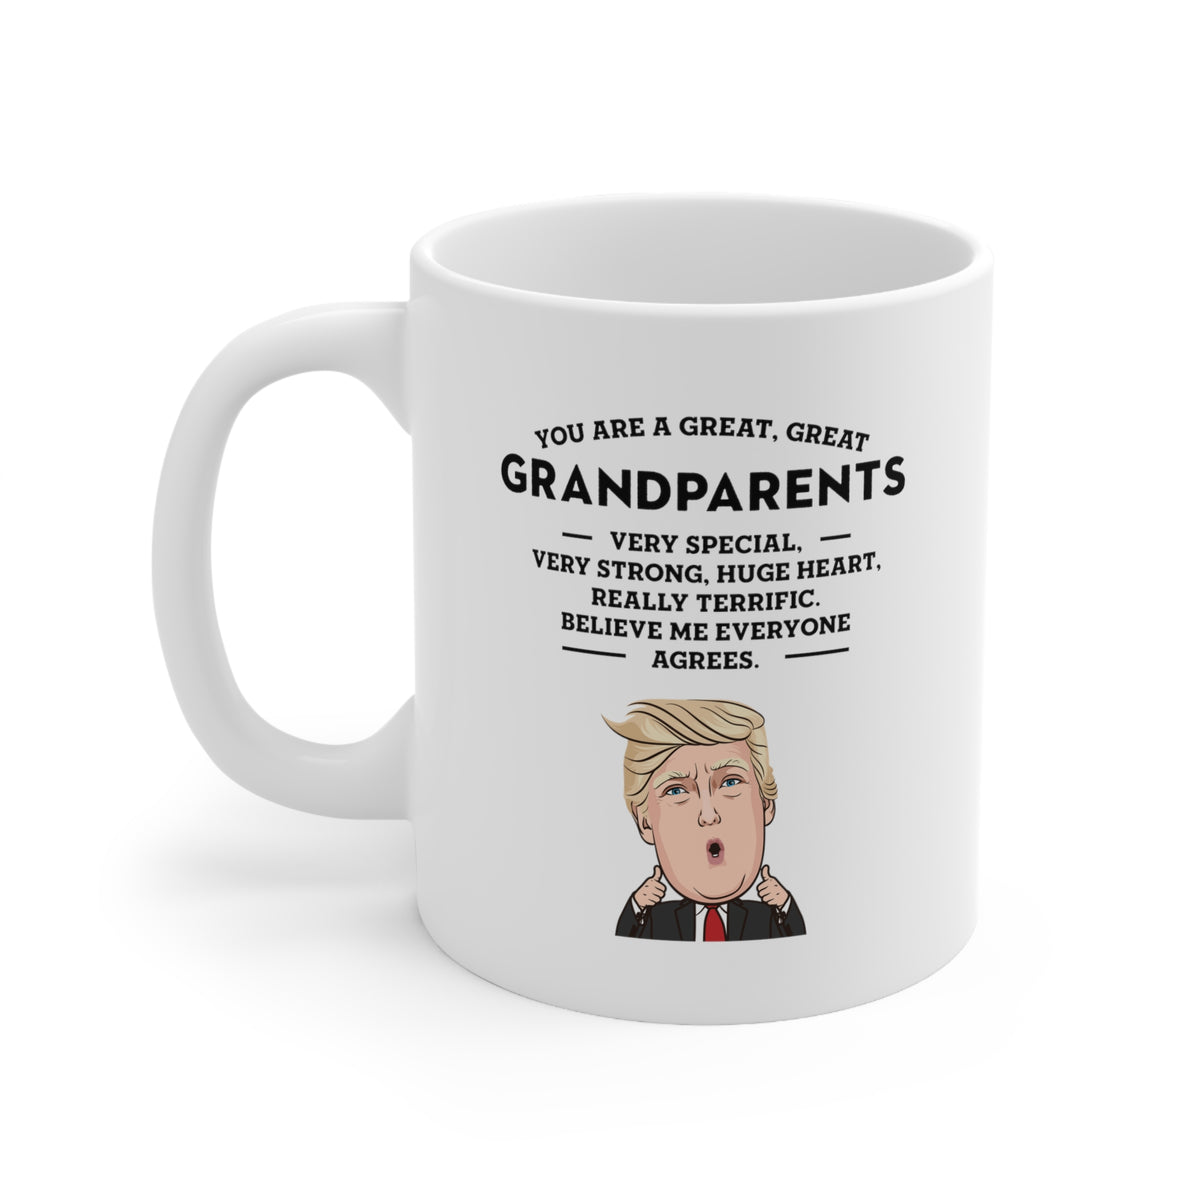 Trump Grandparents 11oz Coffee Mug - Funny Novelty Grandpa/Grandma Gifts - Sarcasm Birthday Christmas Gift For Family